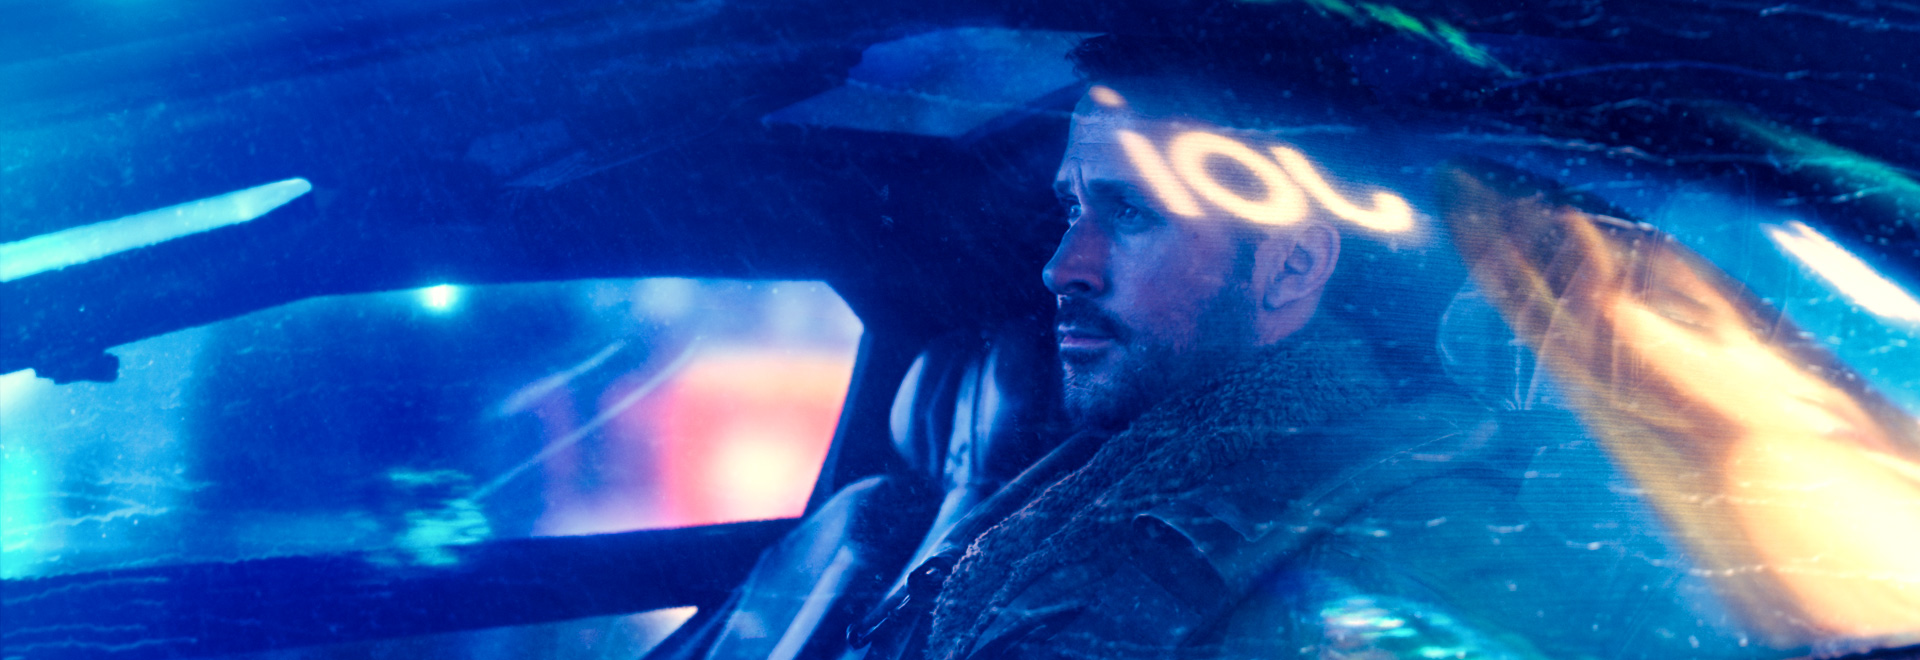 Blade Runner 2049 - A visionary sequel